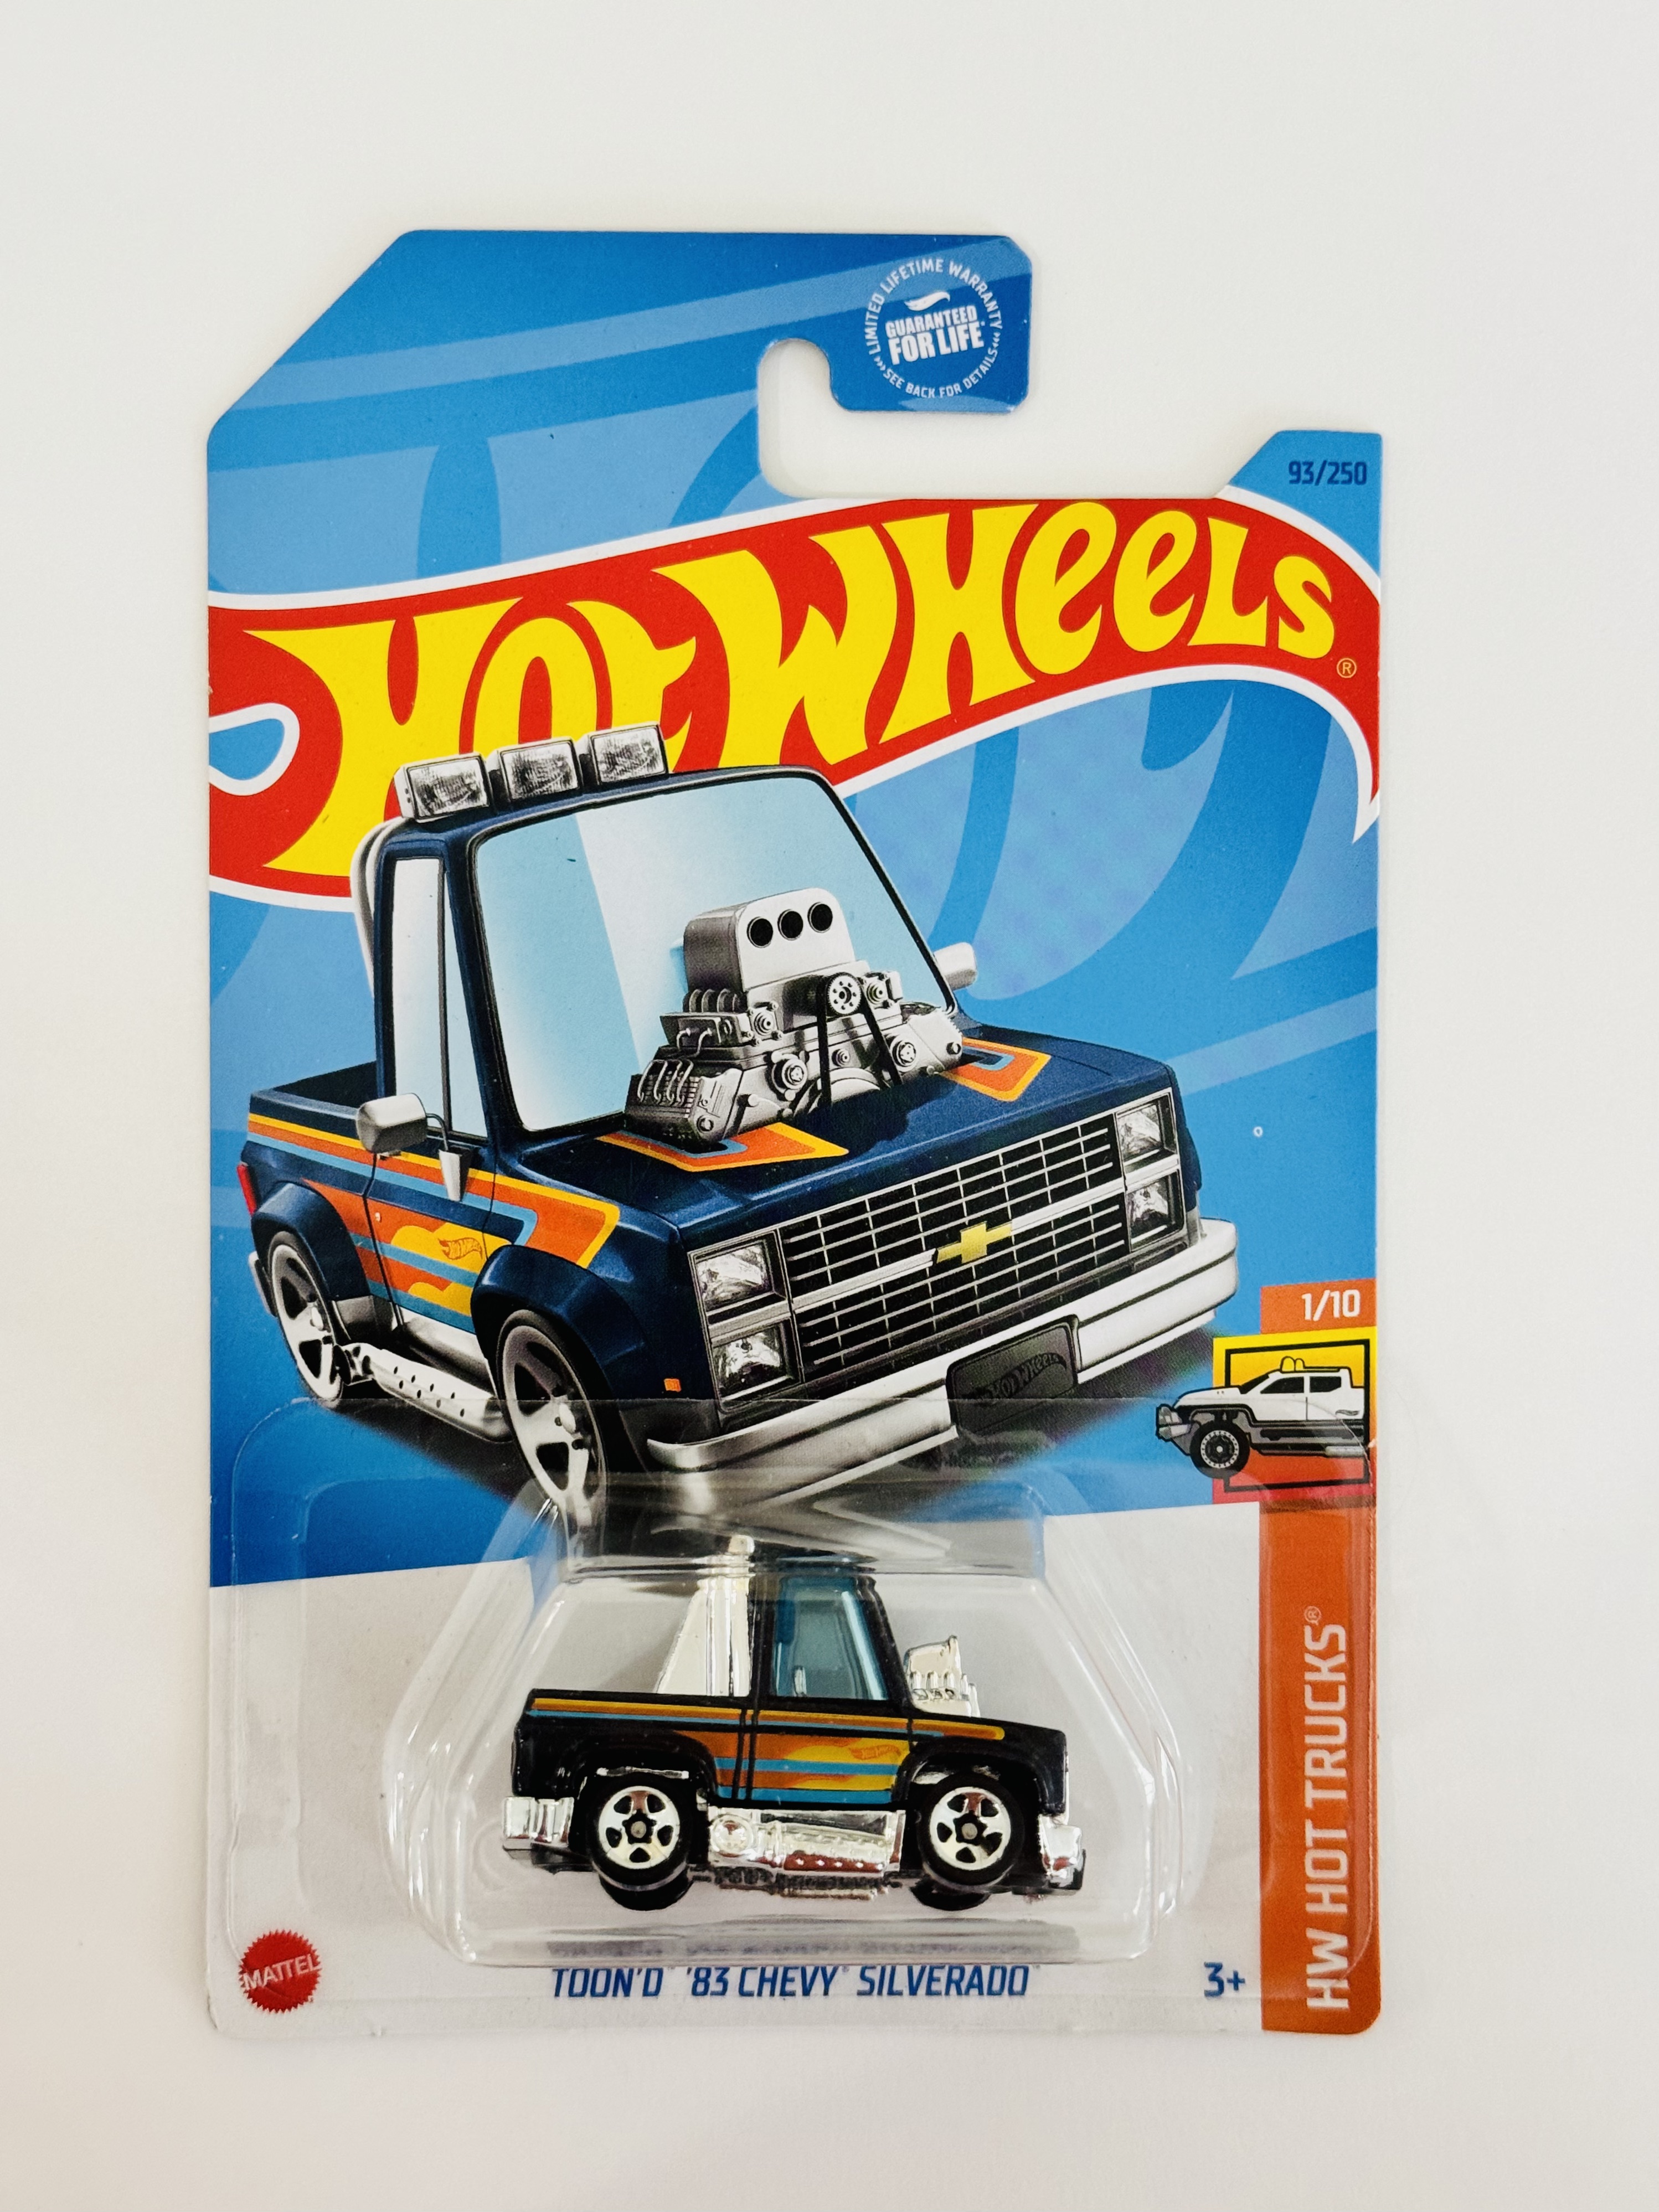 Hot Wheels #93 Toon'd '83 Chevy Silverado